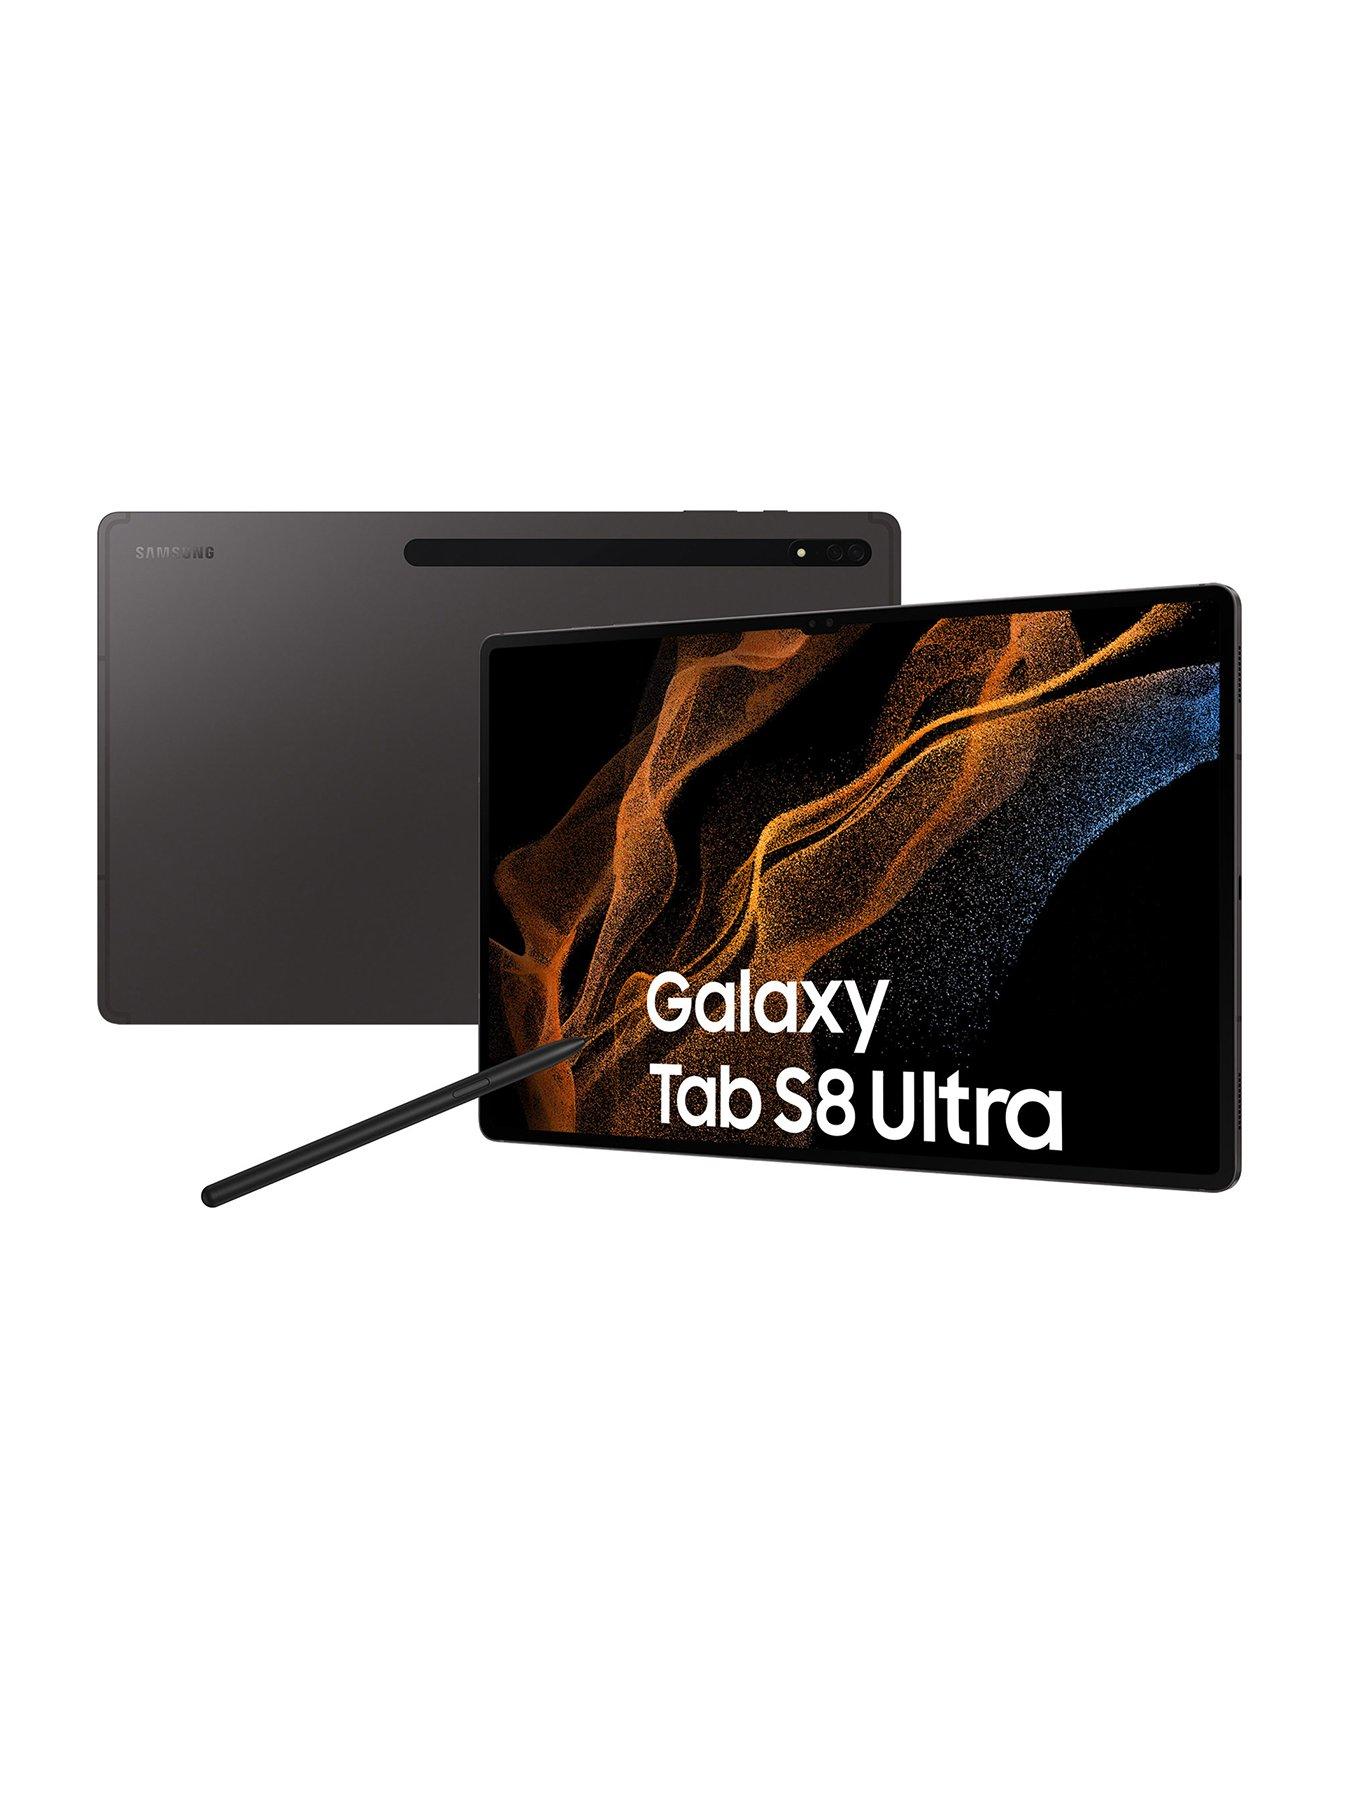 Samsung Galaxy Tab S8 Ultra 256GB - Graphite